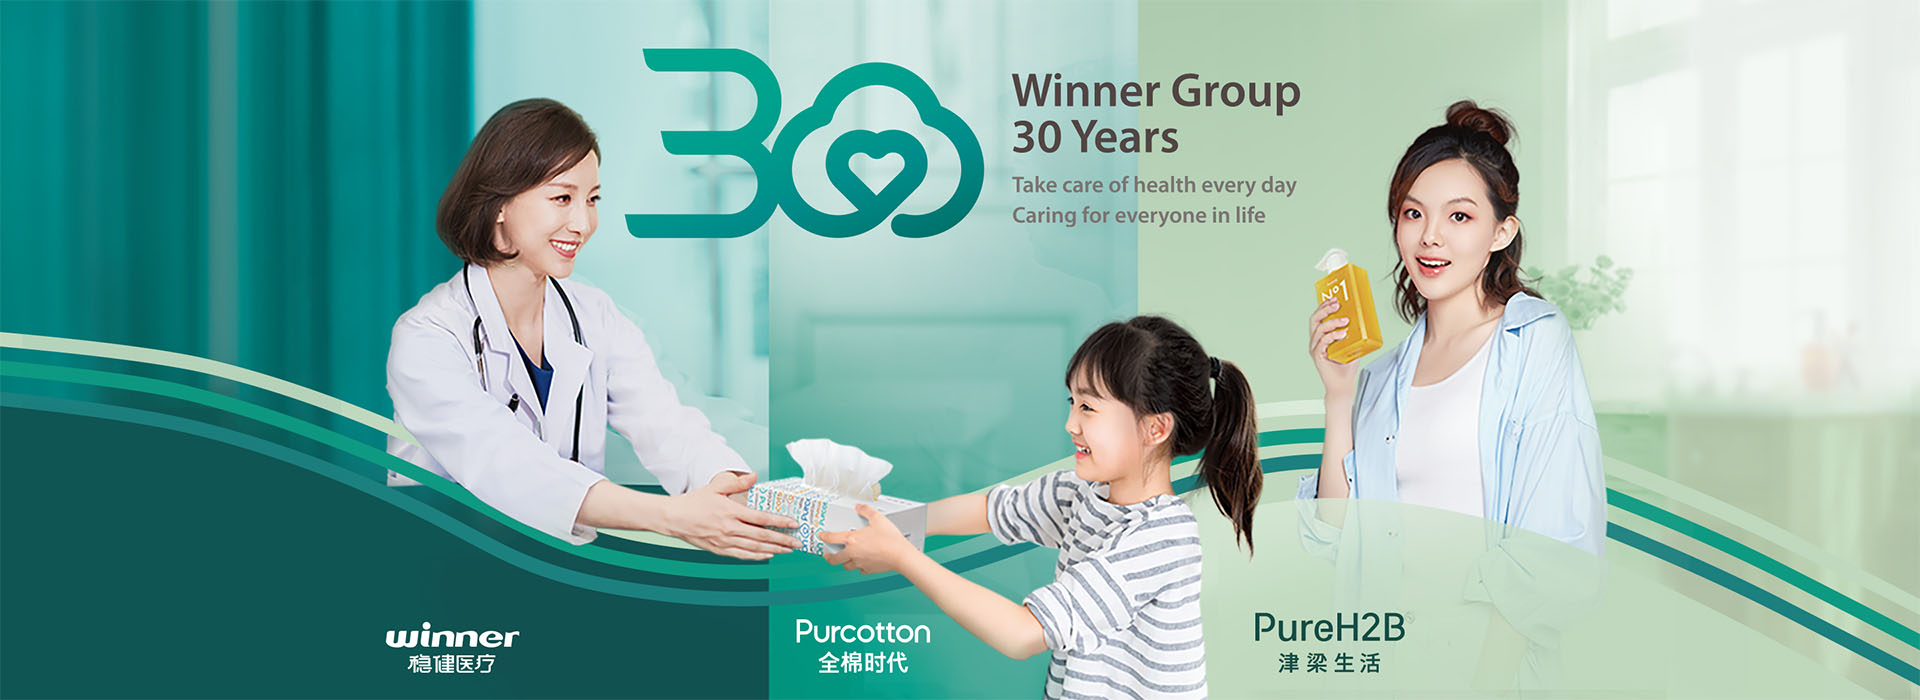 winner group 30 Years